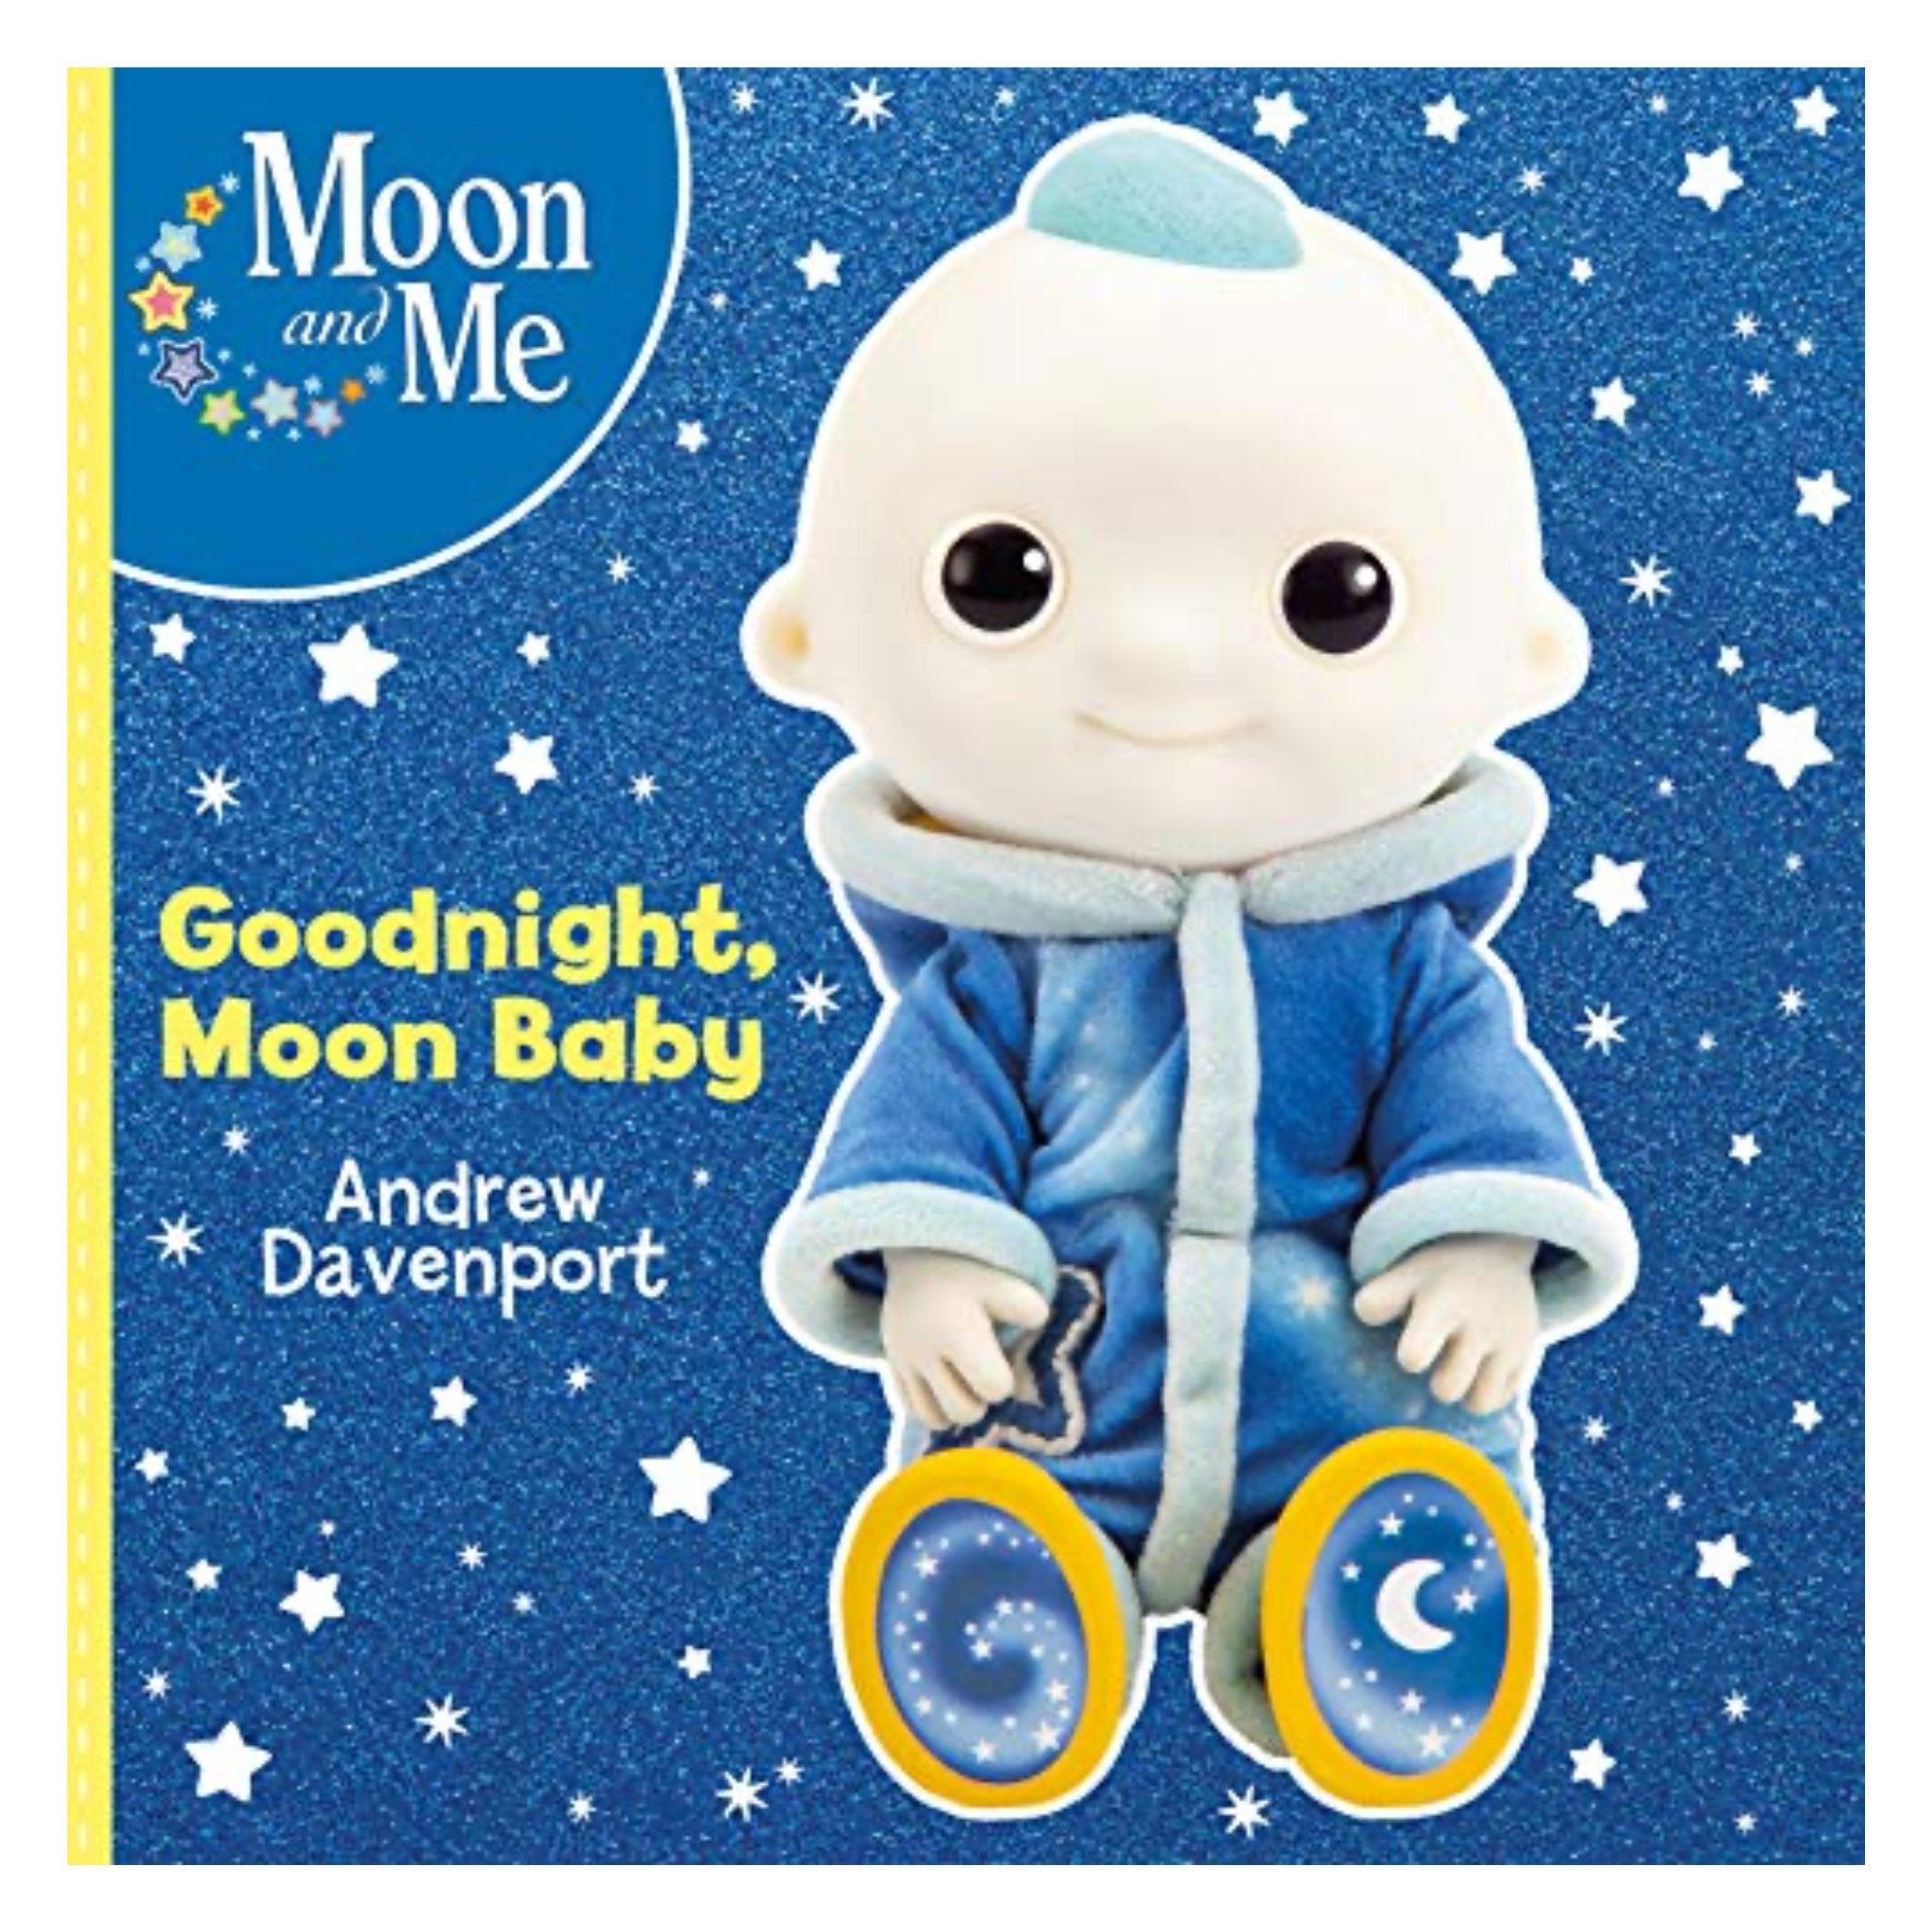 Goodnight, Moon Baby Storybook - PoundToys